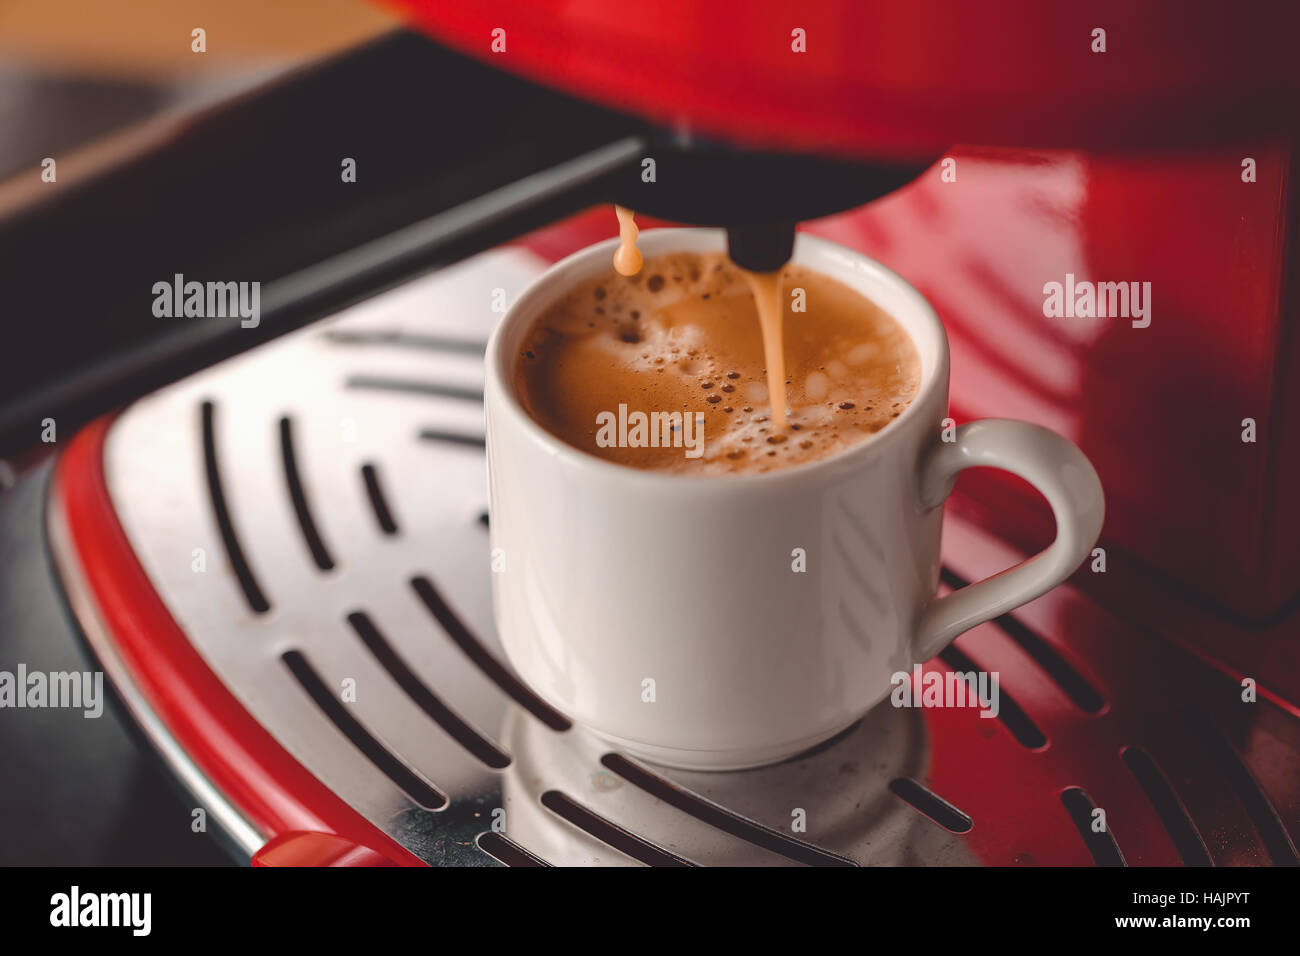 Making coffee with espresso machine Stock Photo